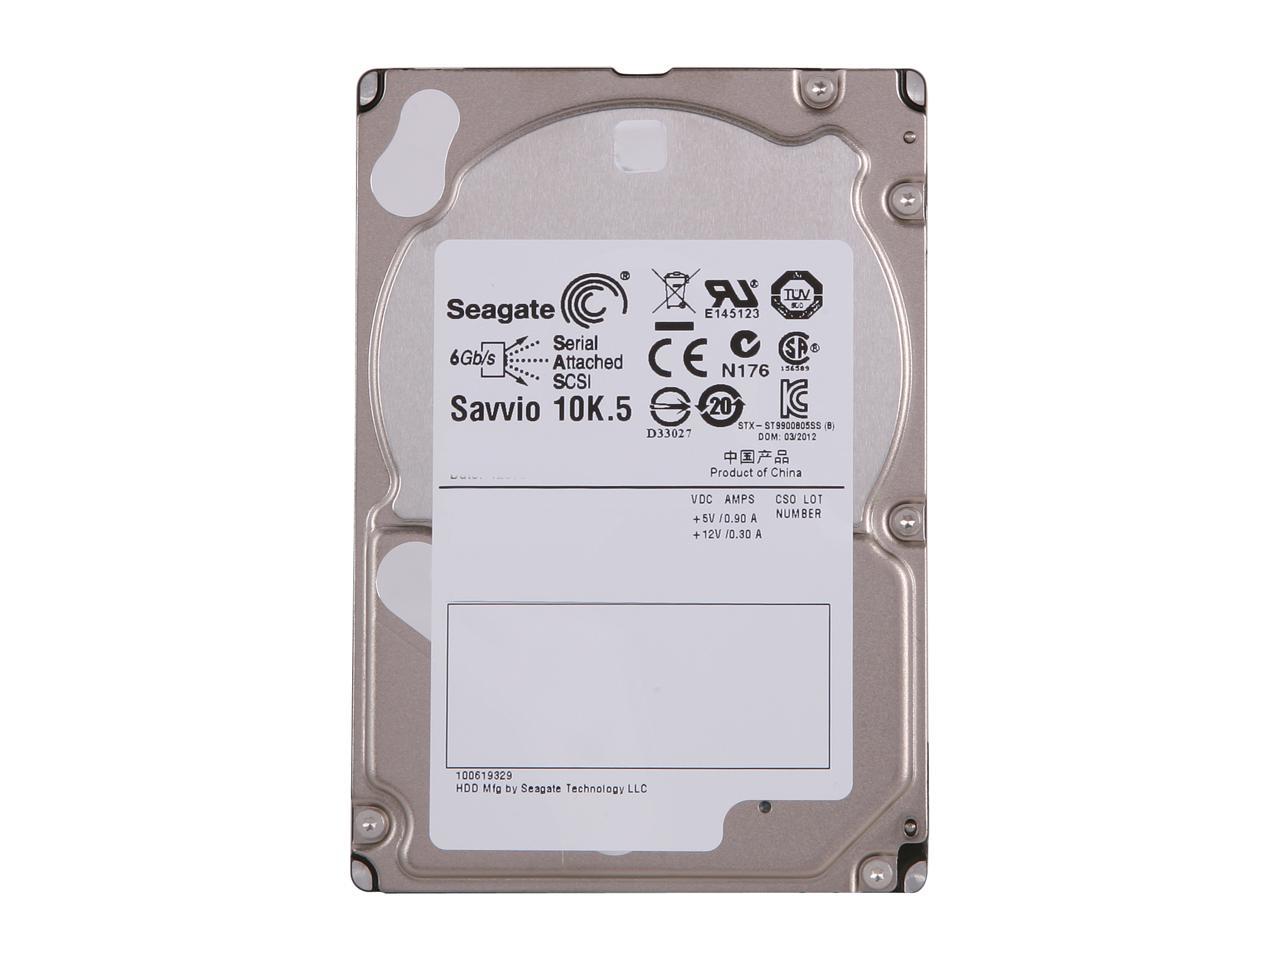 SEAGATE SAVIO ST973451SS 72GB 15K 2.5" SAS DRIVE 